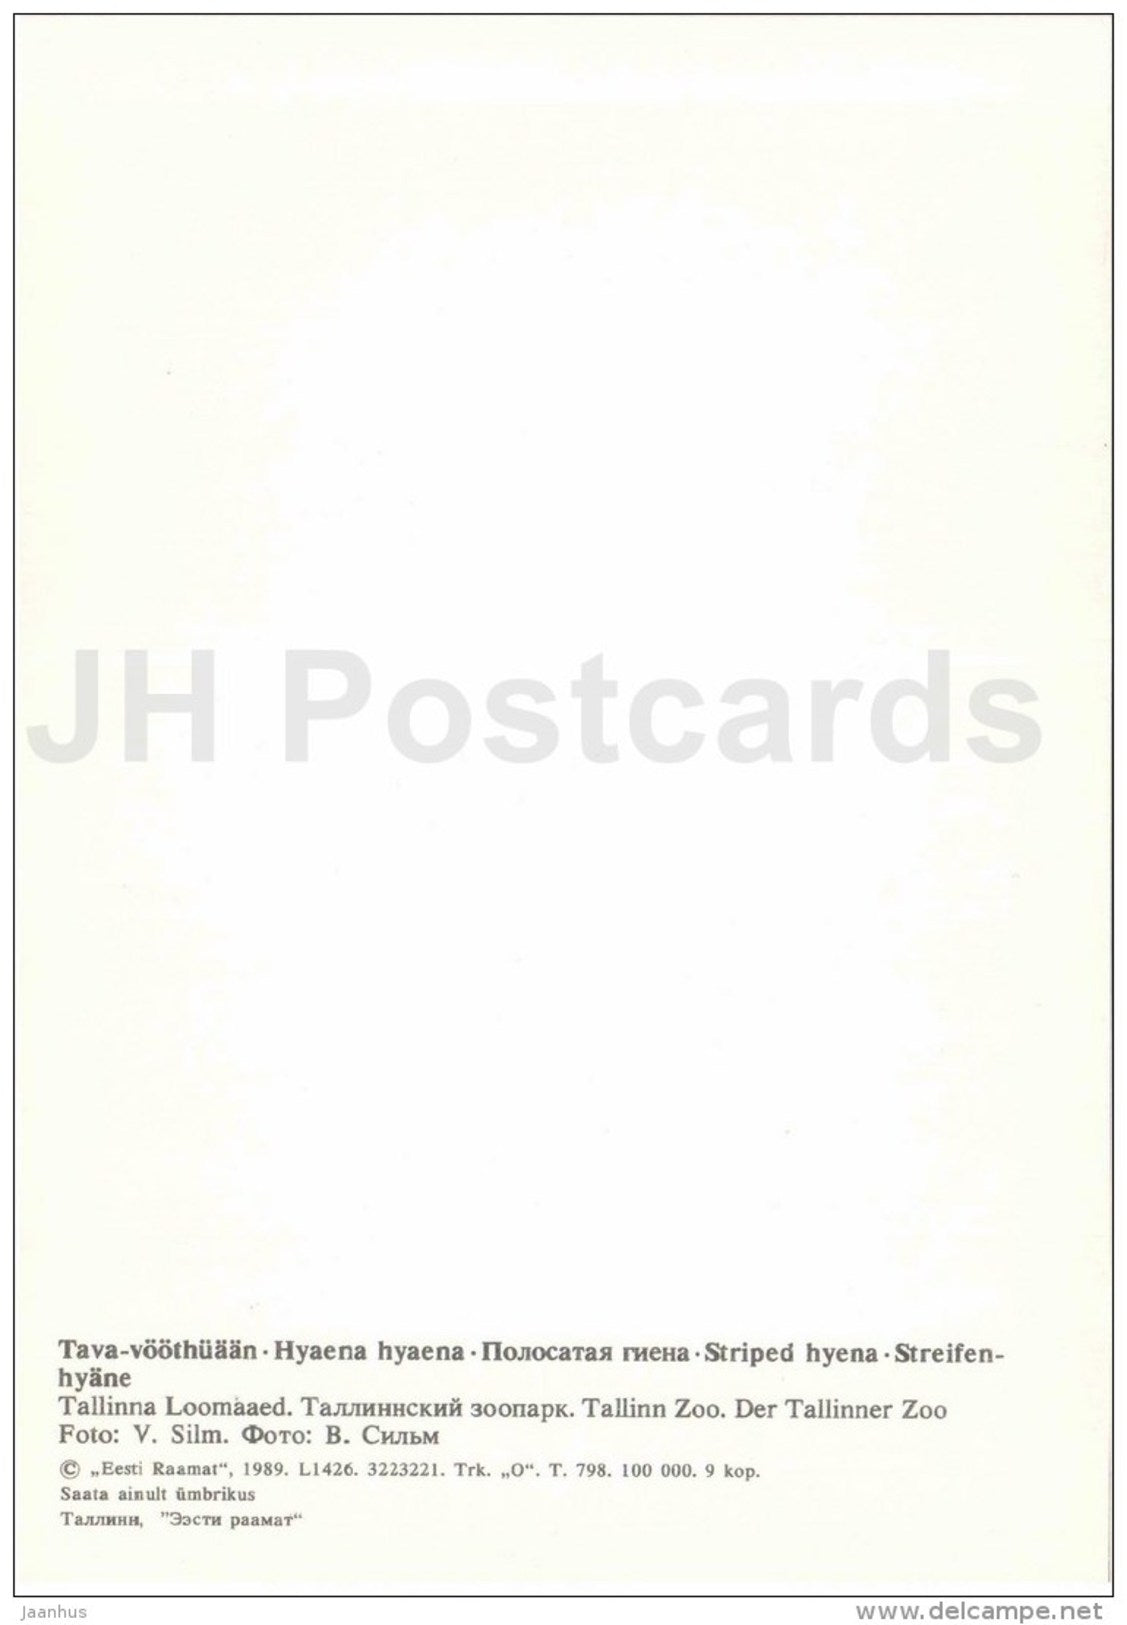 Striped hyena - Hyaena hyaena - large format card - Tallinn Zoo 50 - 1989 - Estonia USSR - unused - JH Postcards